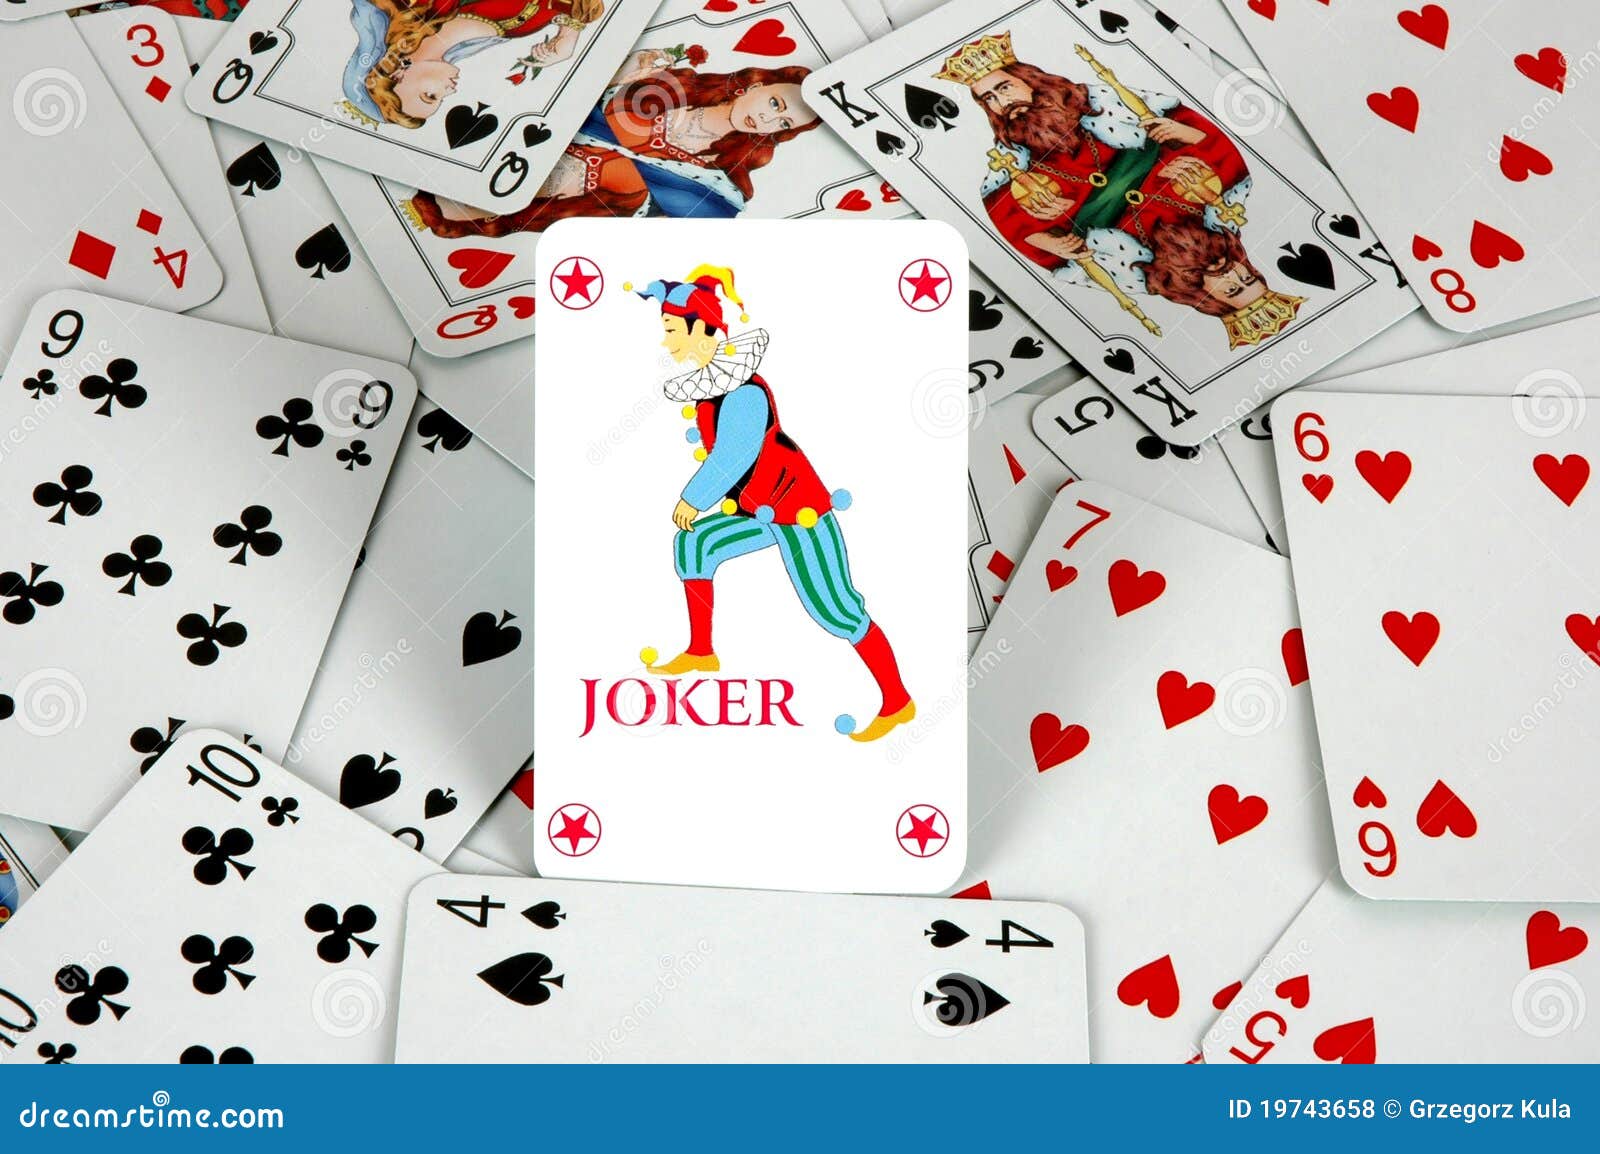 Joker stock photo. Image of face, tarot, hearts, queen - 19743658